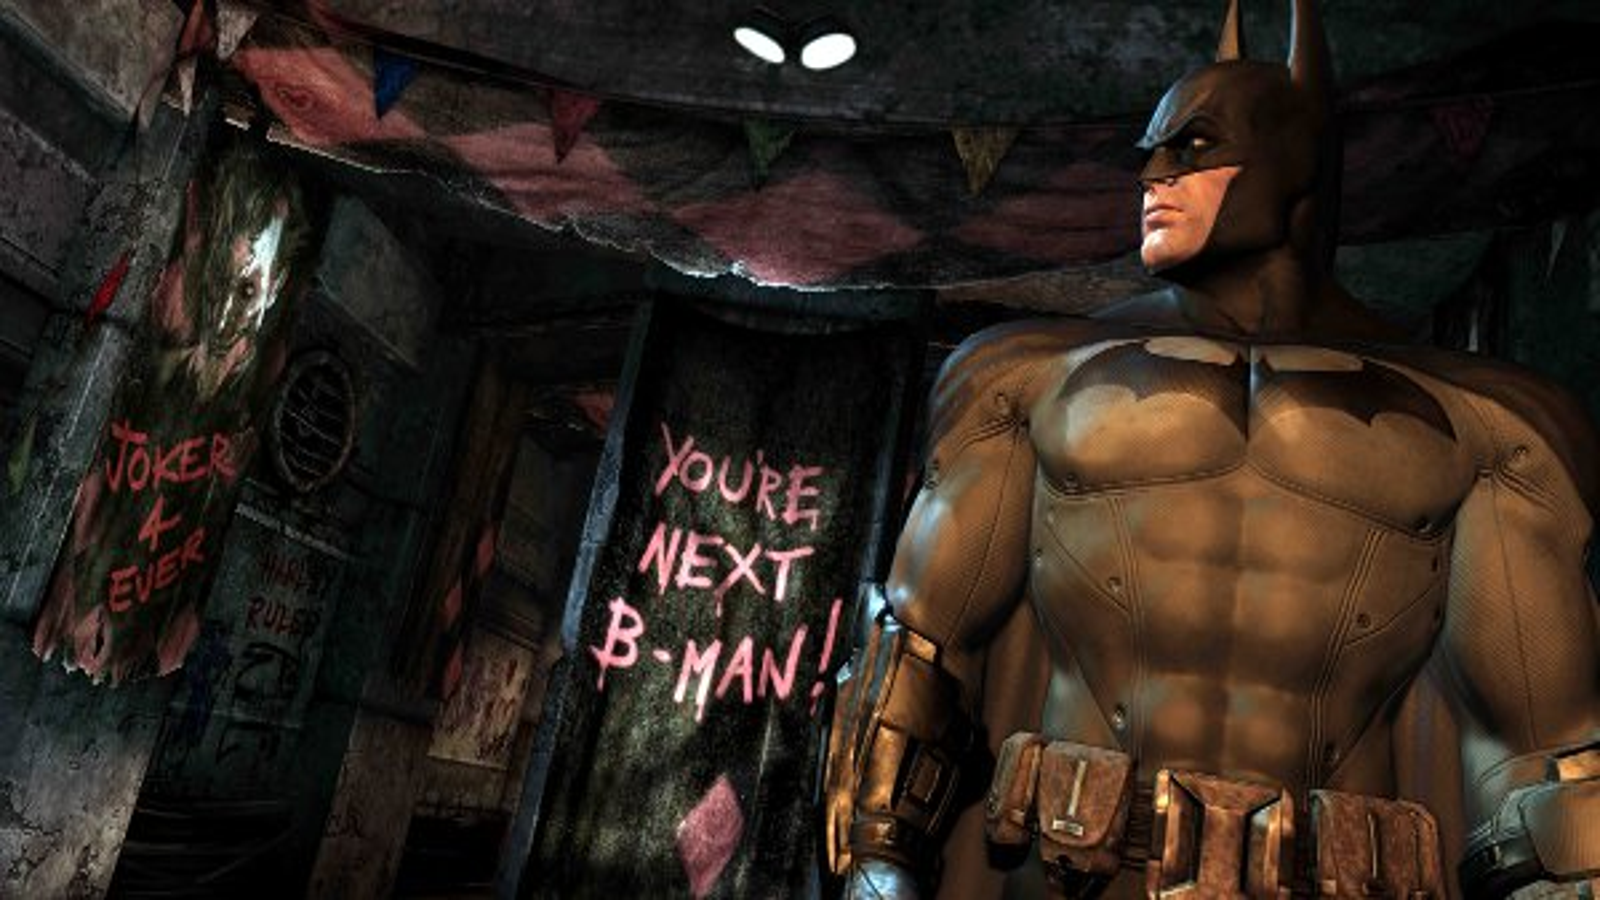 The Batman Arkham subreddit has decreed that Batman: Arkham World